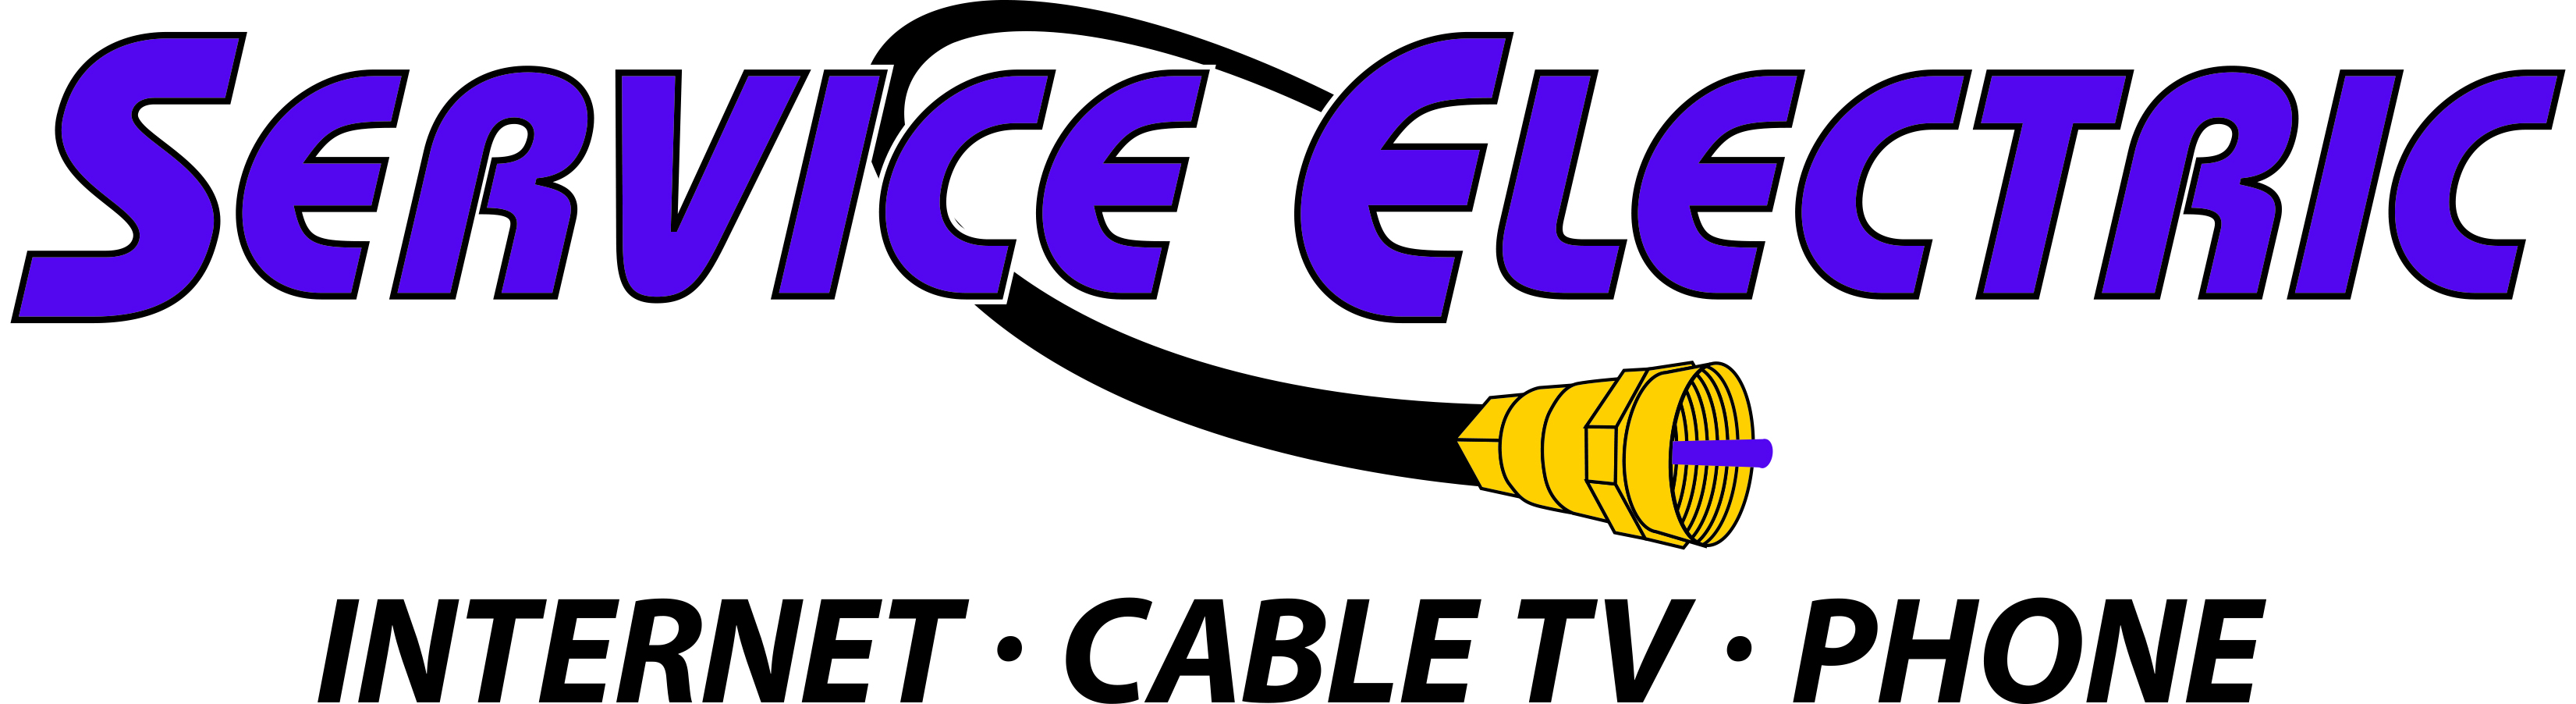 Service Electric 